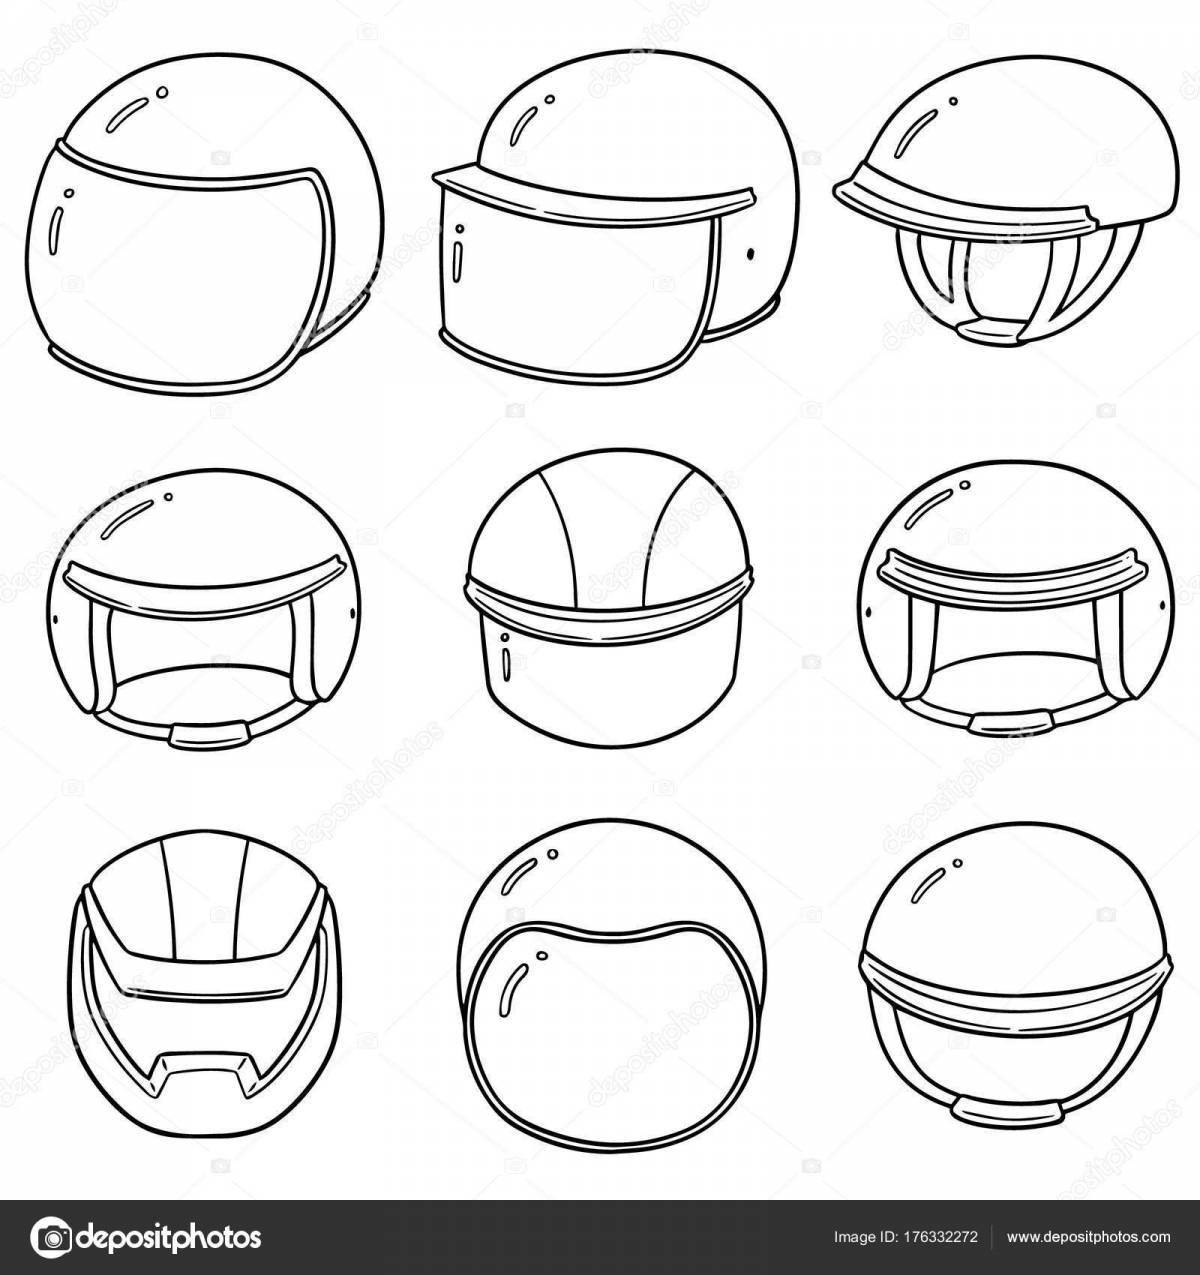 Playful motorcycle helmet coloring page